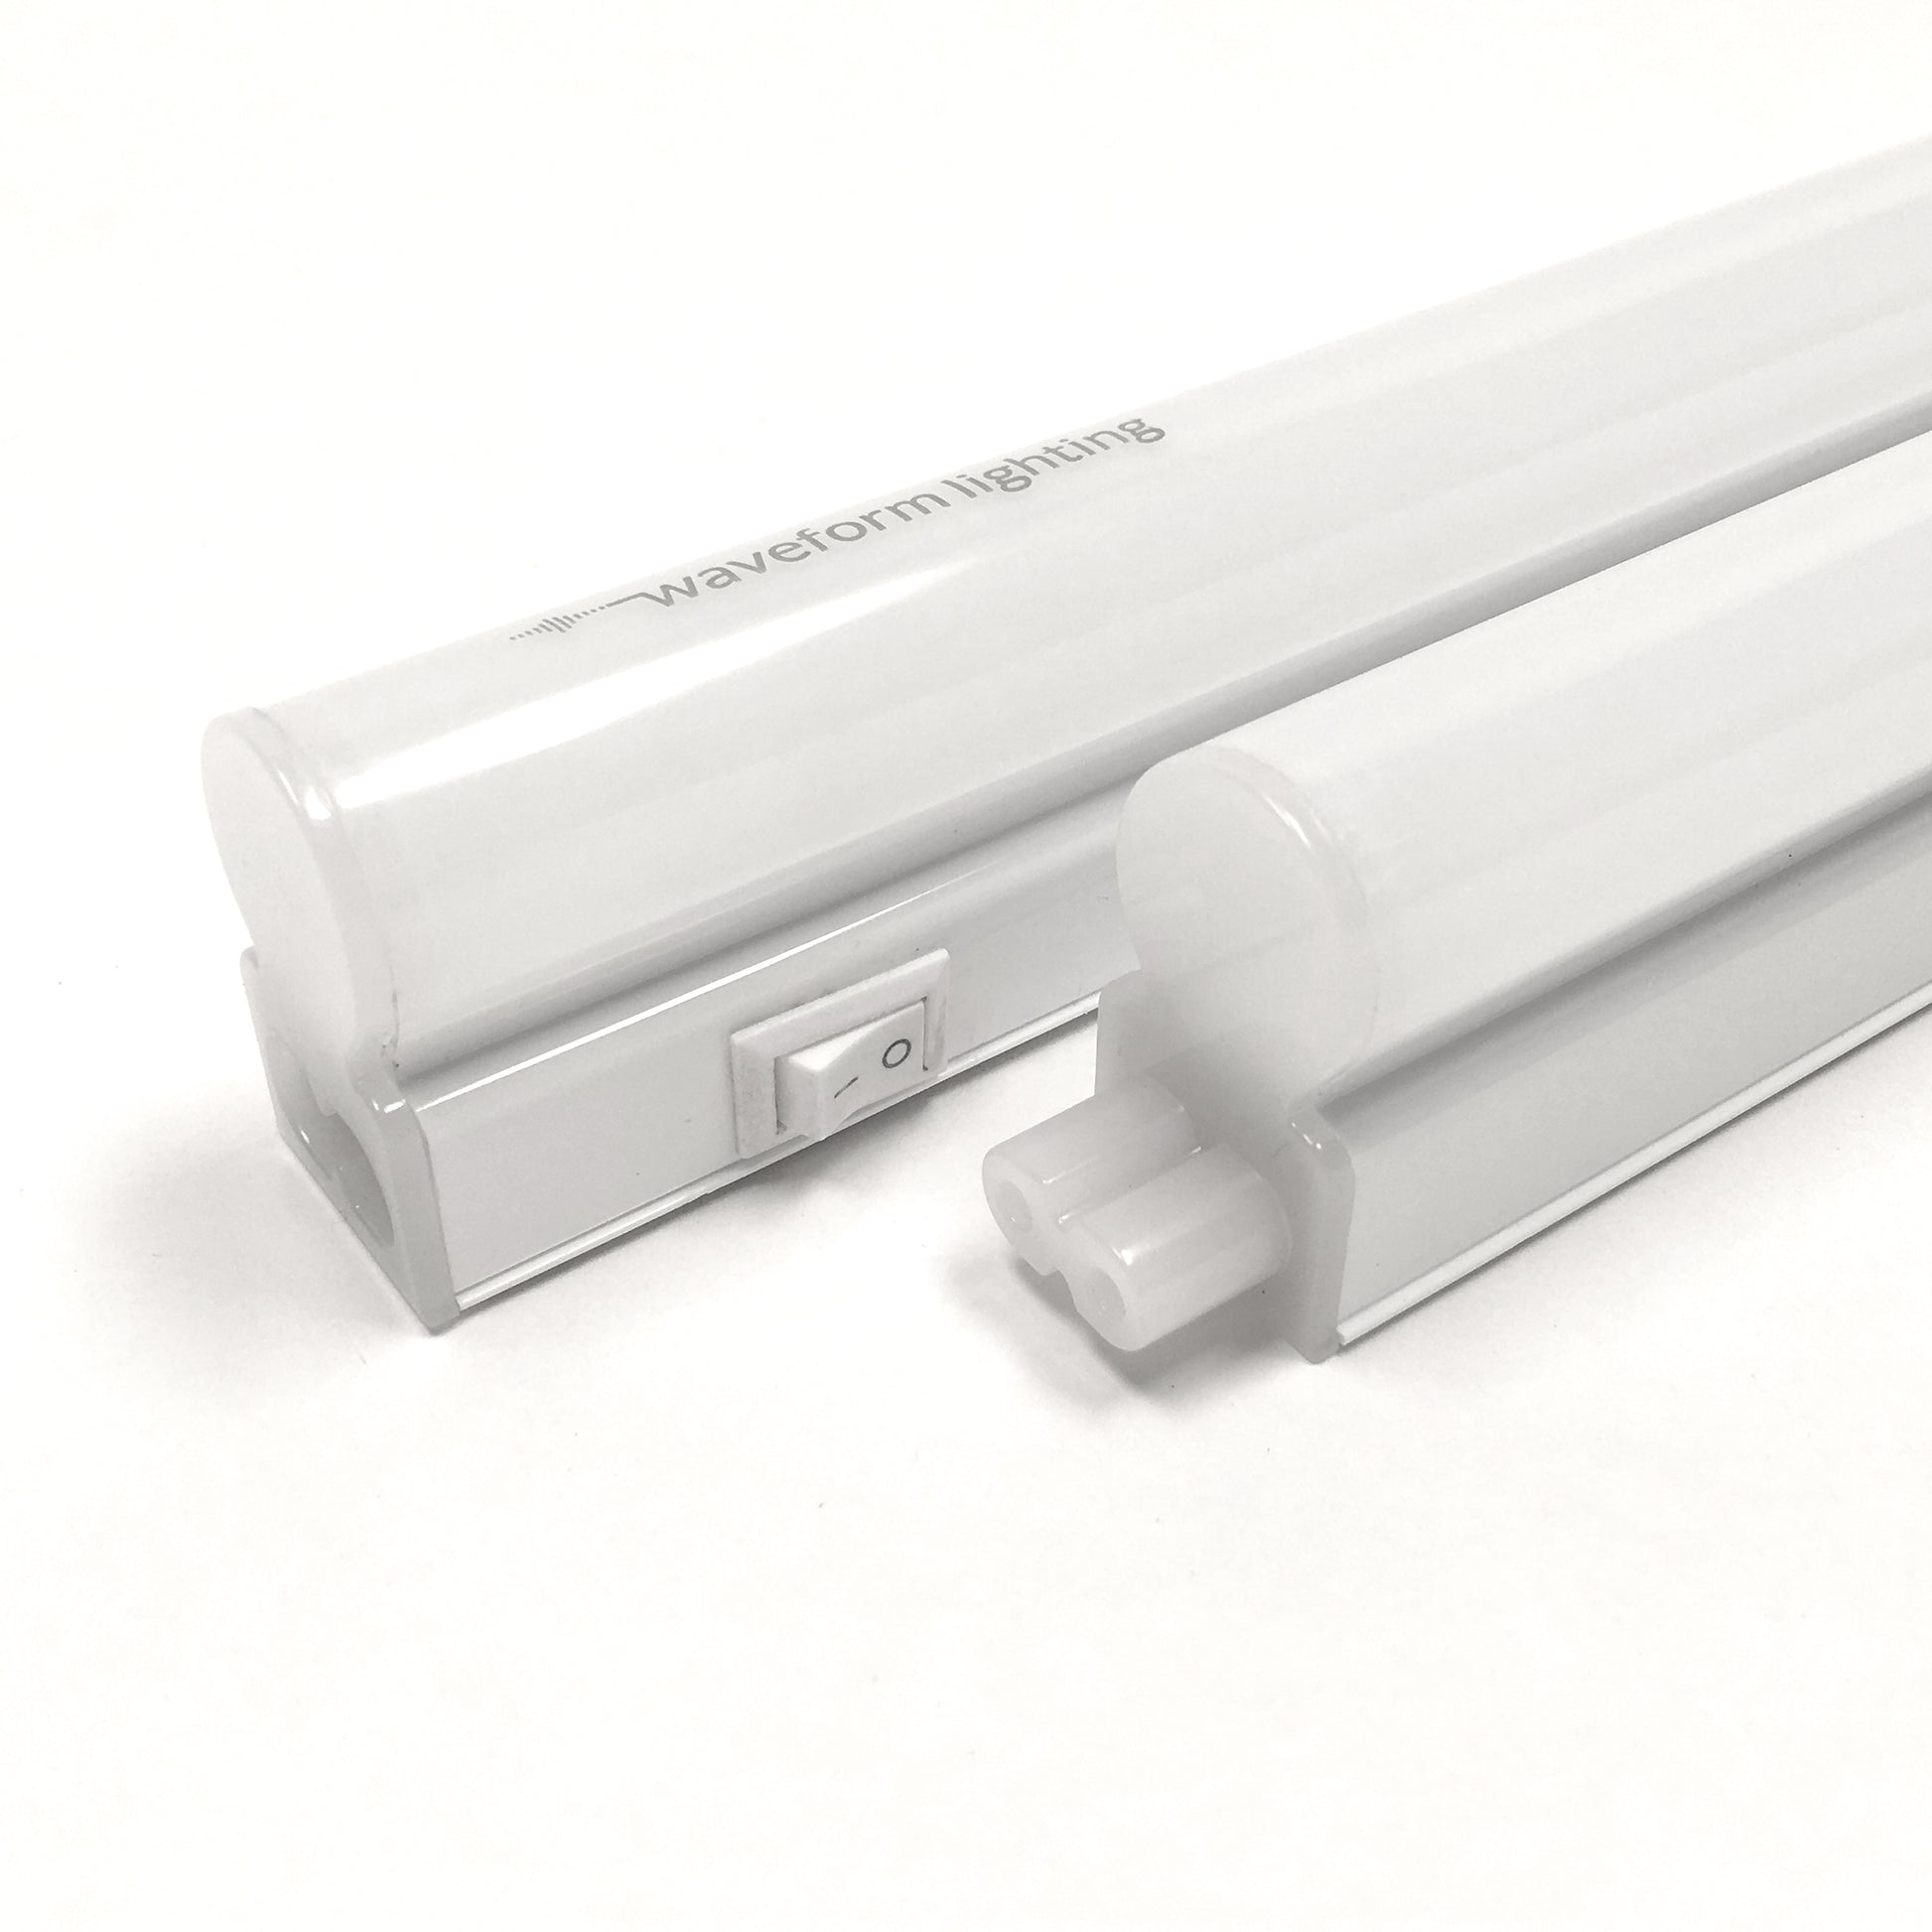 NorthLux™ 95 CRI LED Linear Fixture – Waveform Lighting